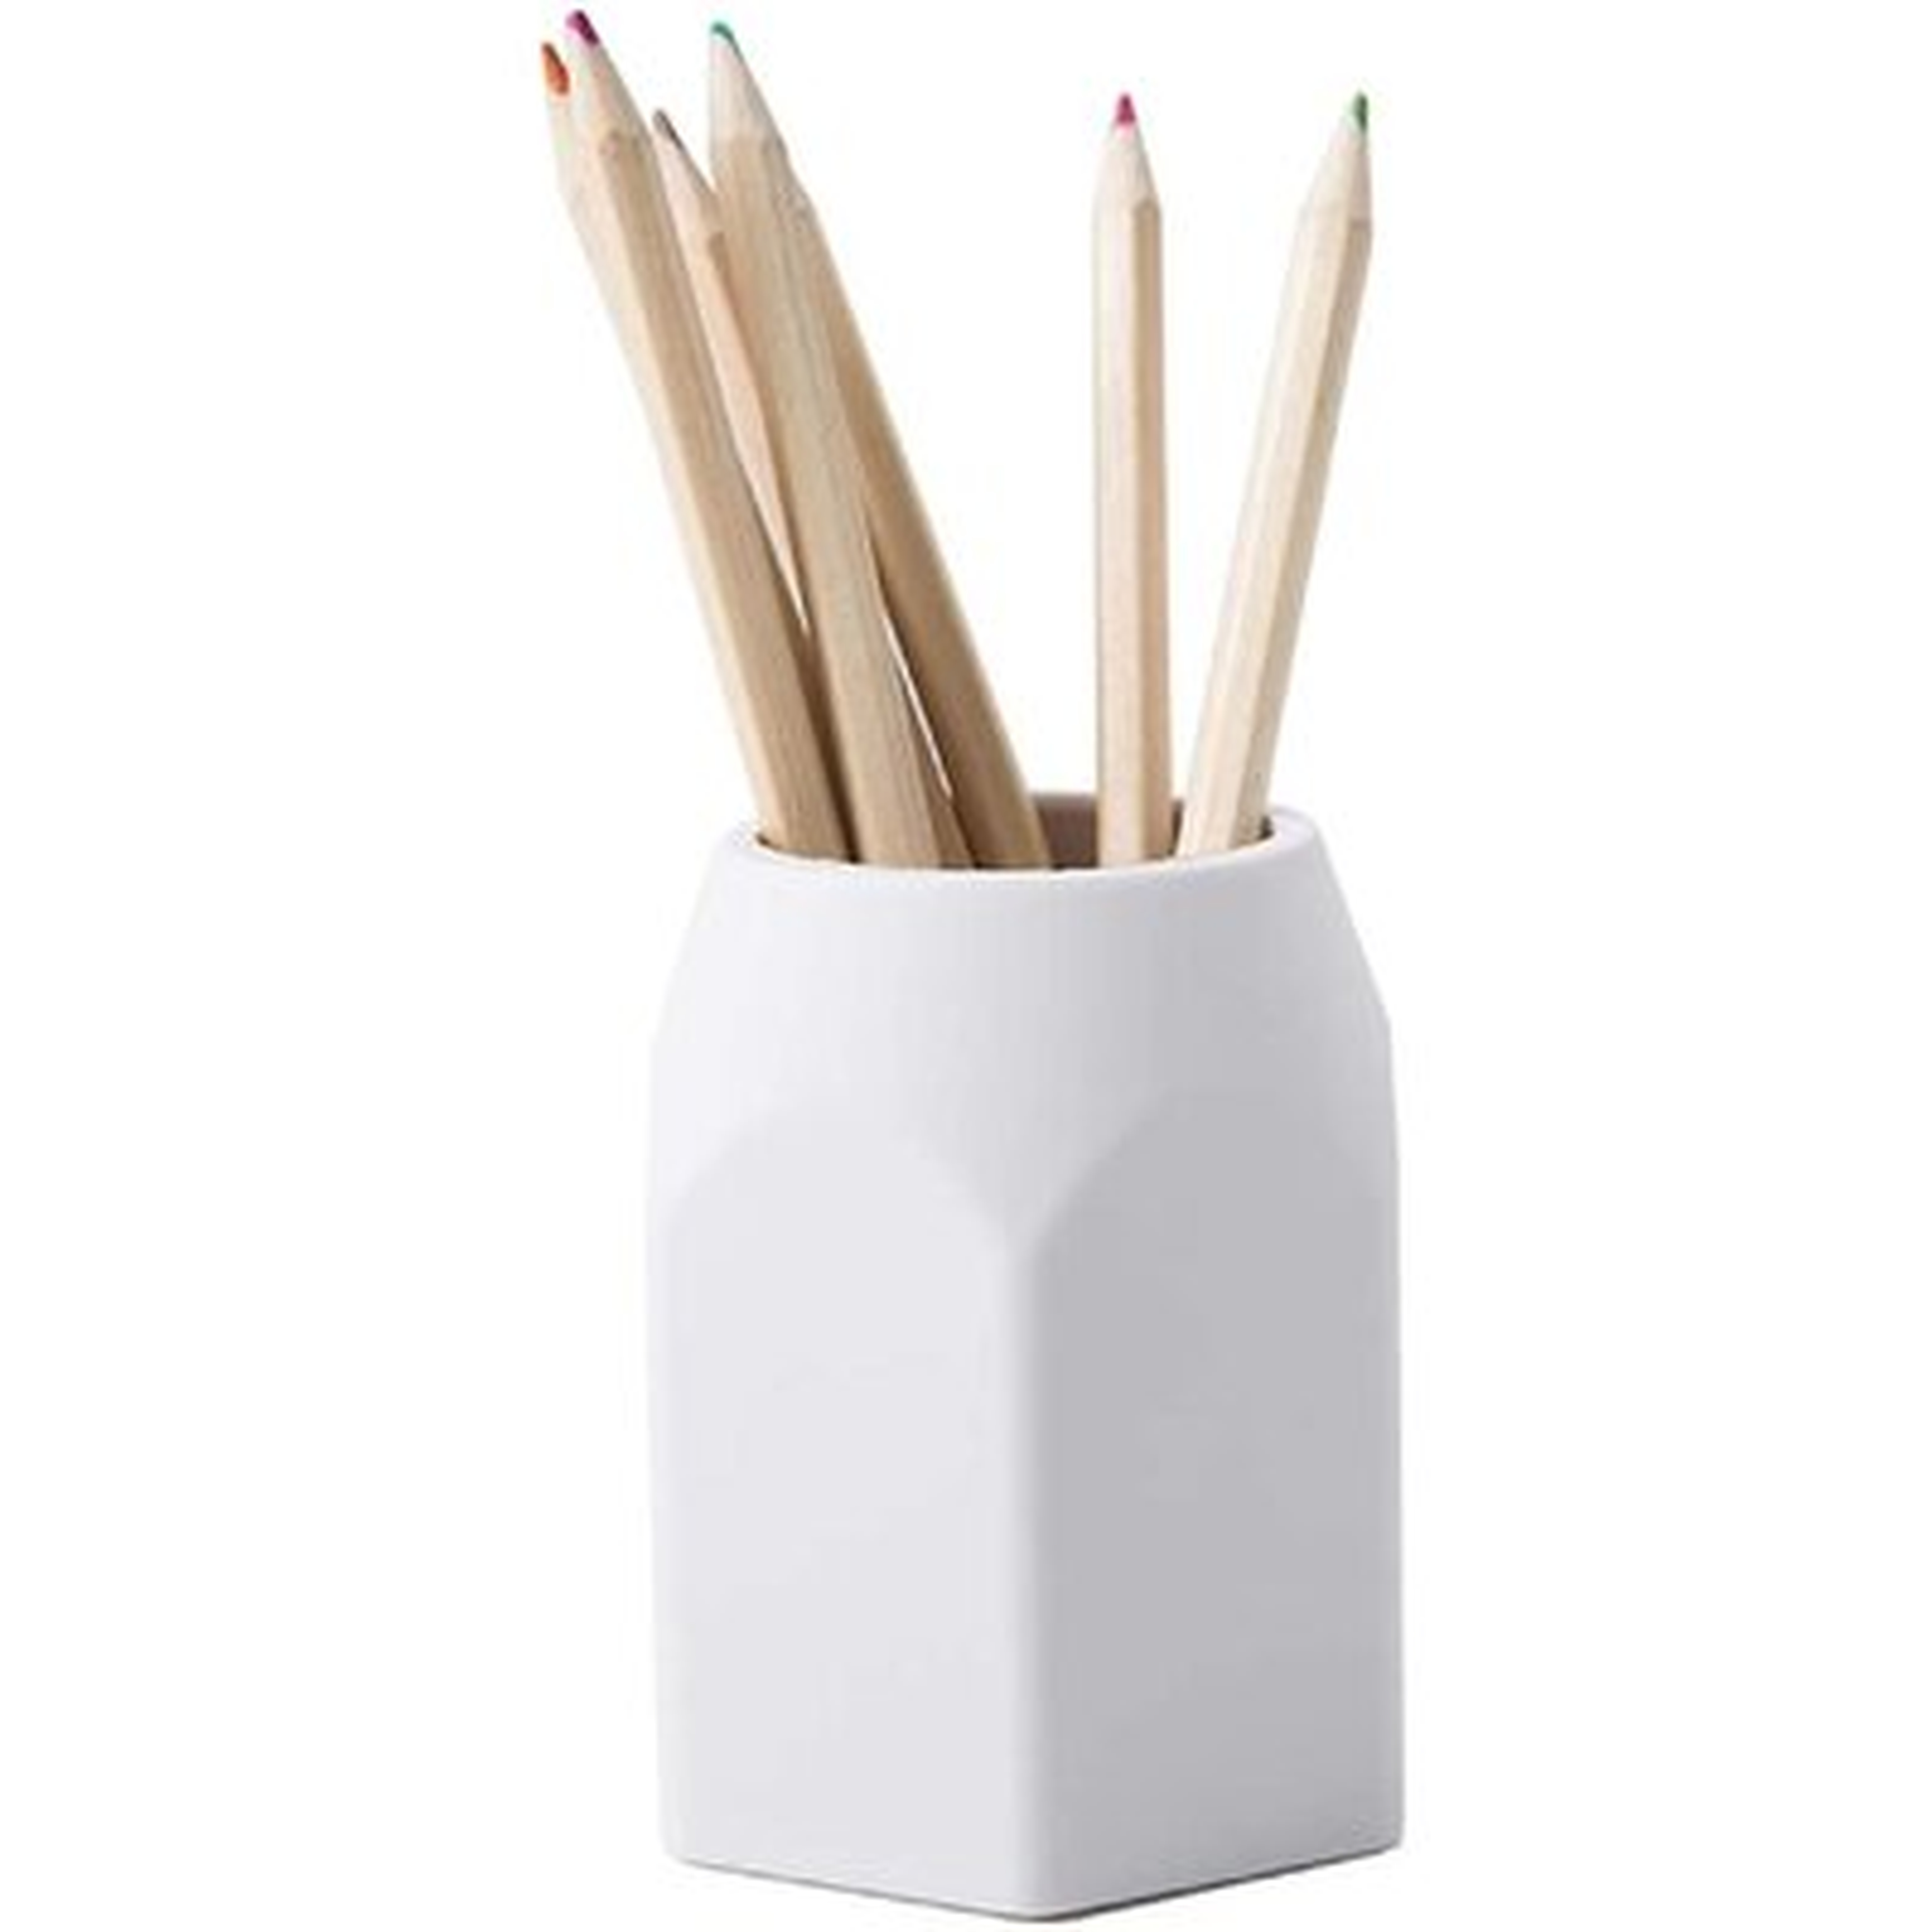 Silicone Pencil Holder Pen Cup For Office Desktop Stationery Organizer Makeup Brush Holder - Wayfair